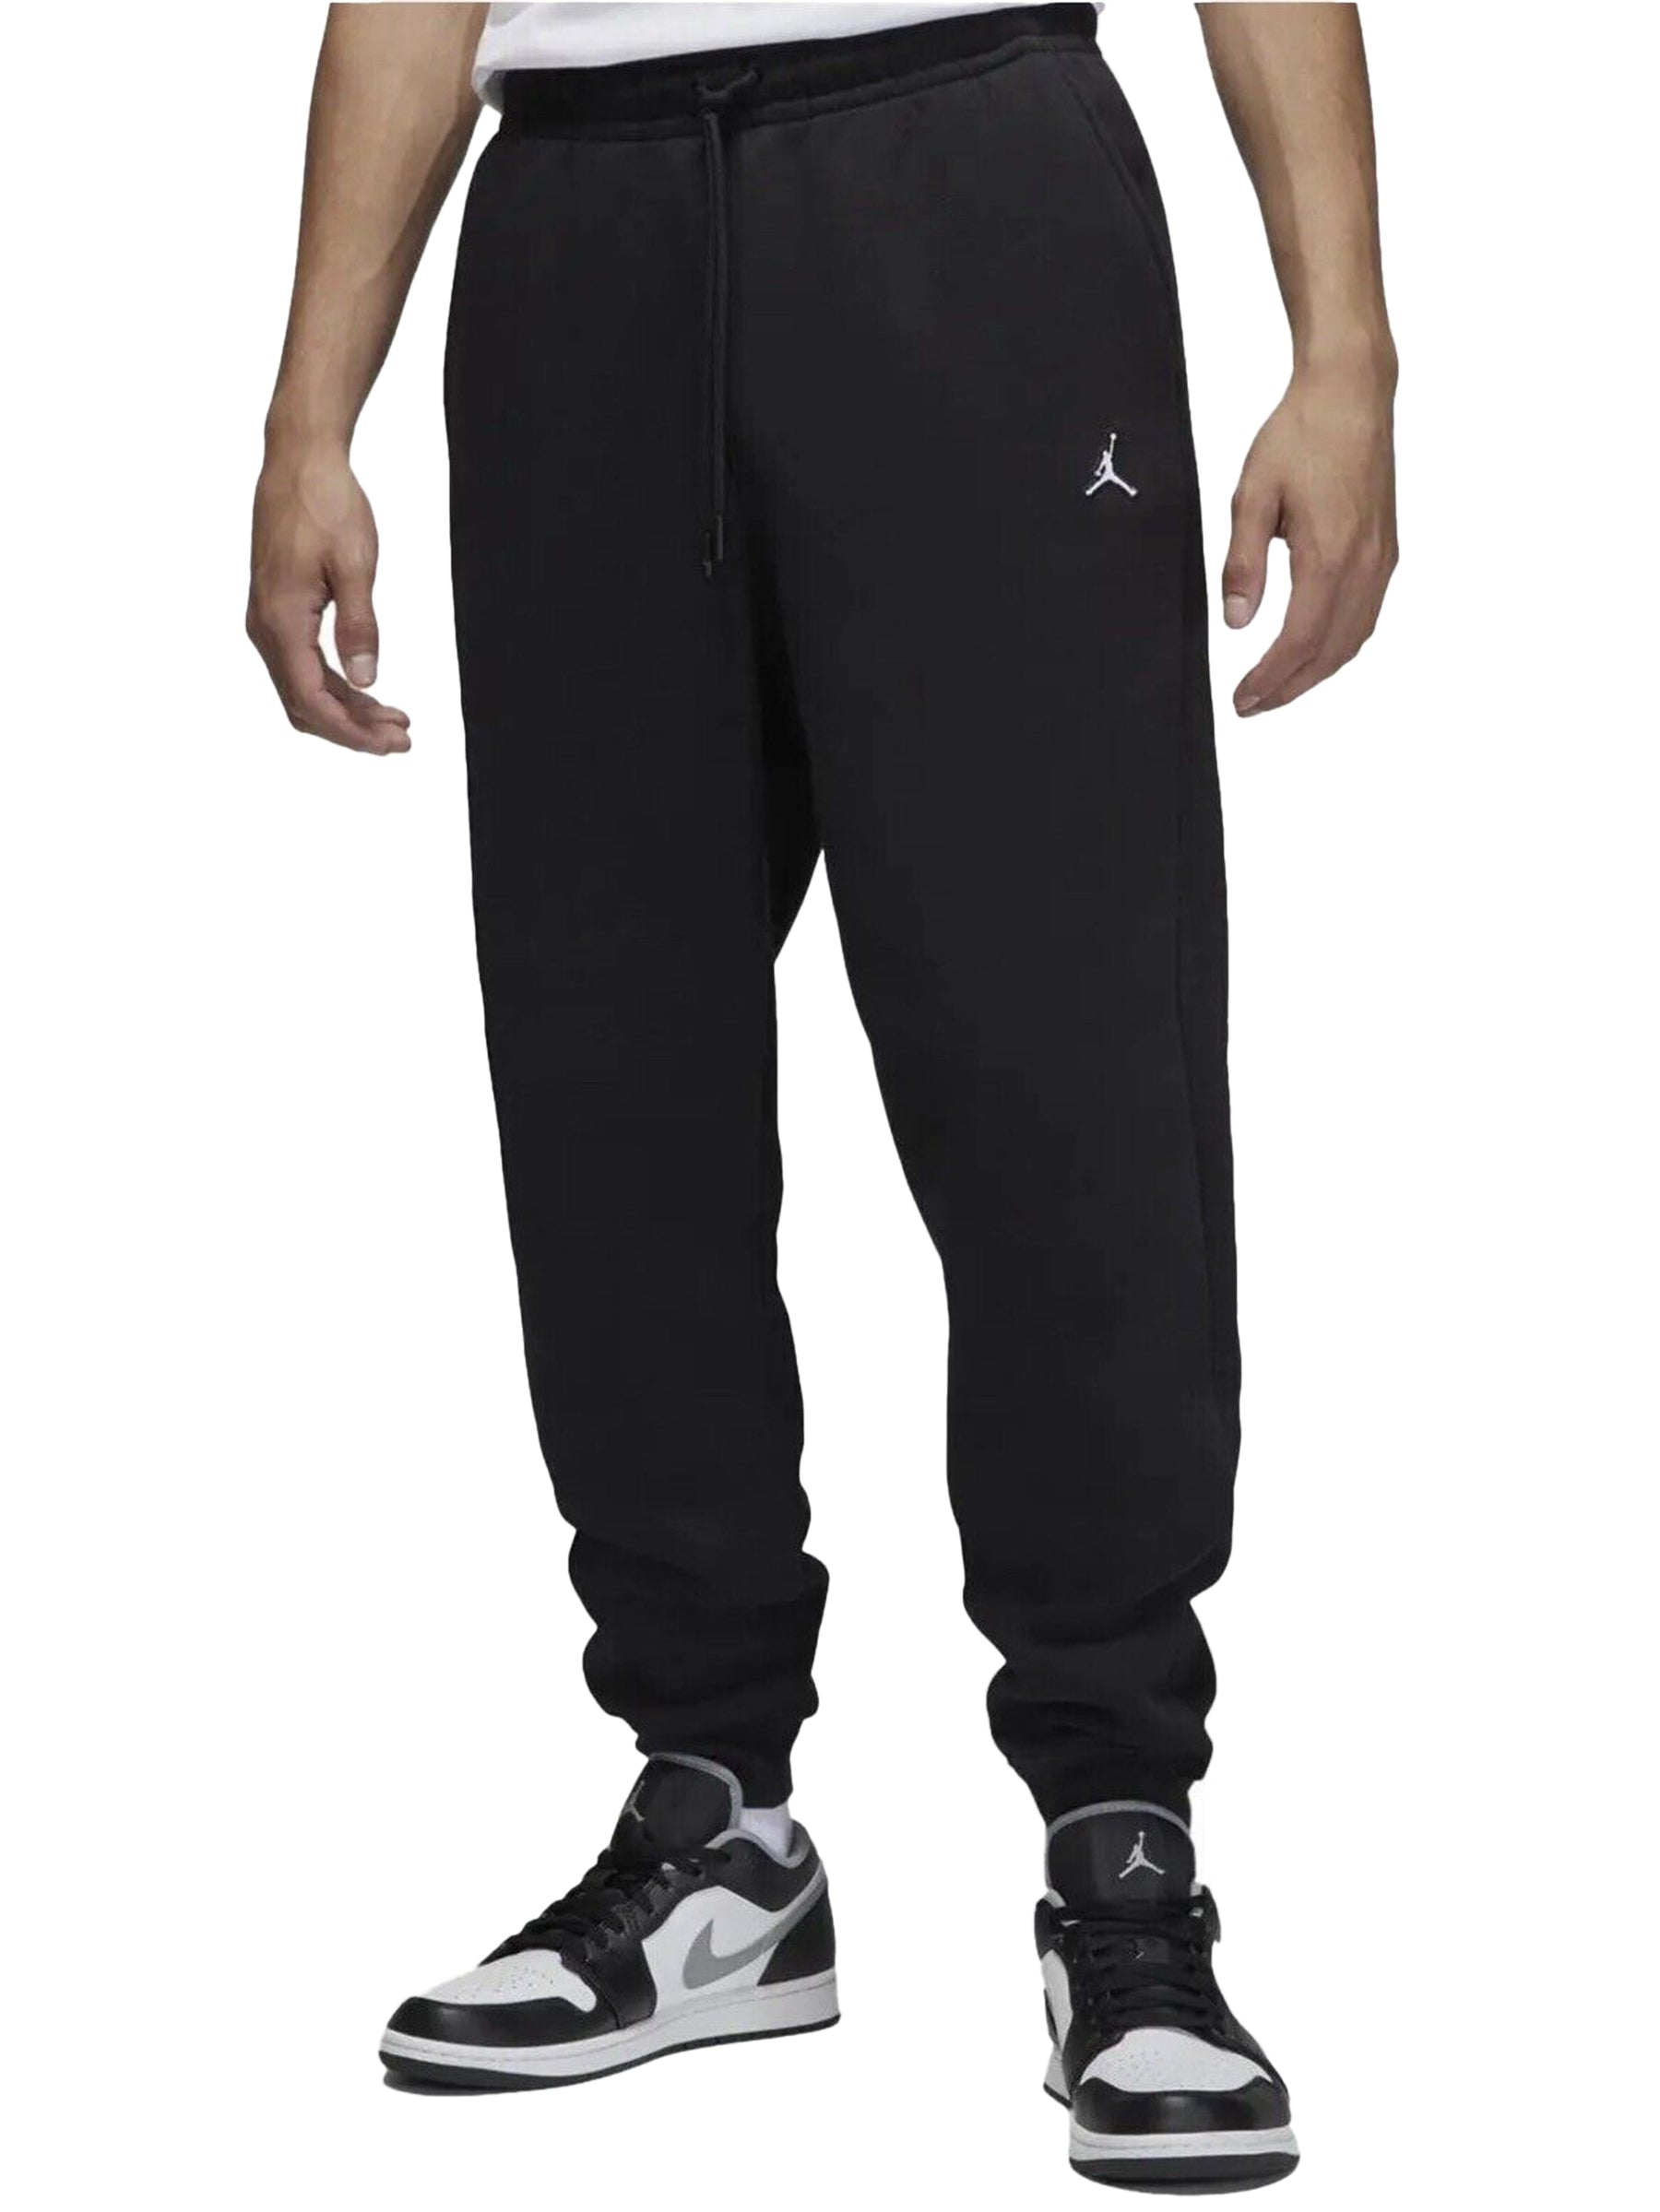 NIKE_TRK_SUIT_DQ7350 Copy of Nike Jordan Fleece Tracksuit Set NIKE RAWDENIM